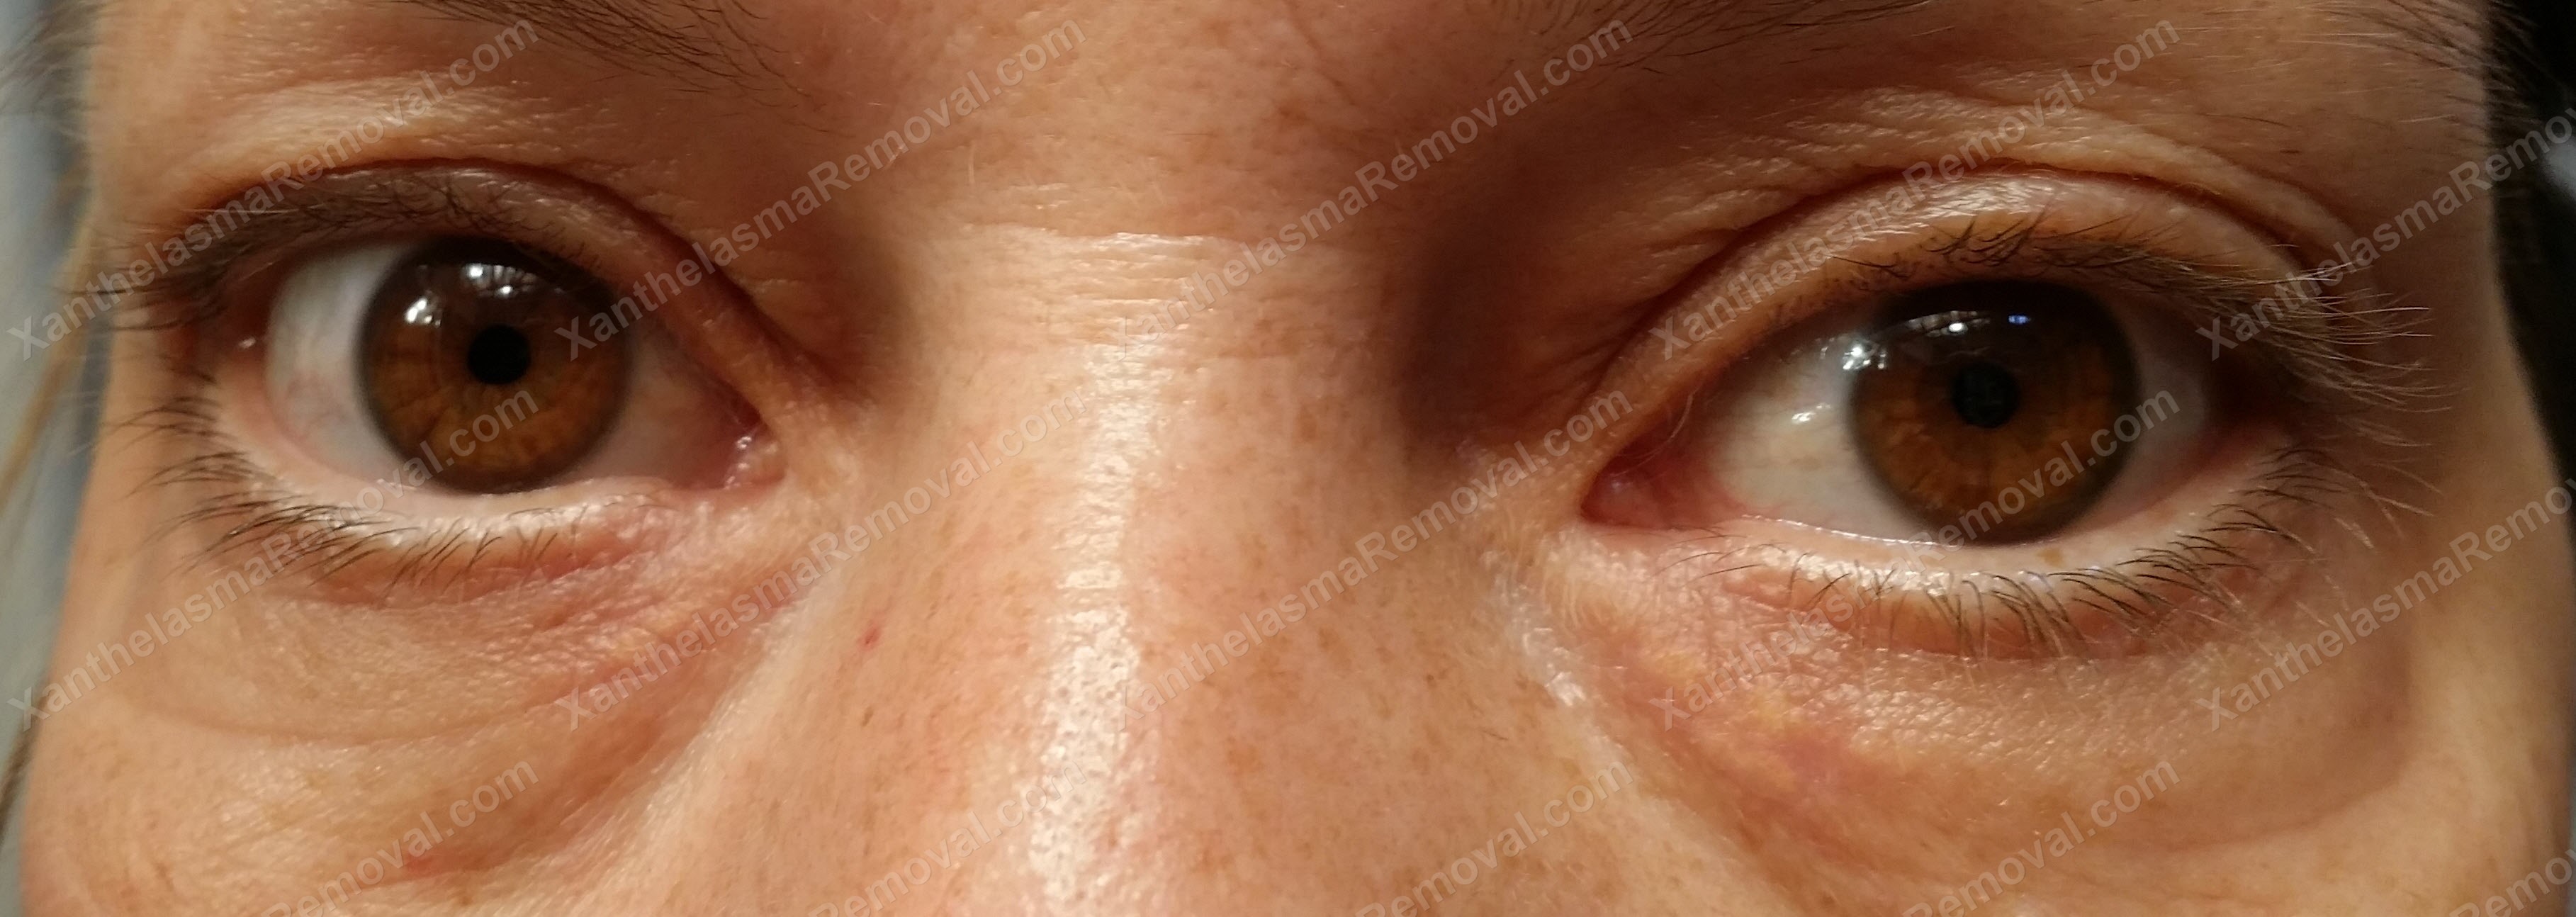 Eyelid+Xanthomas sa: Pigmentation skin xanthomas